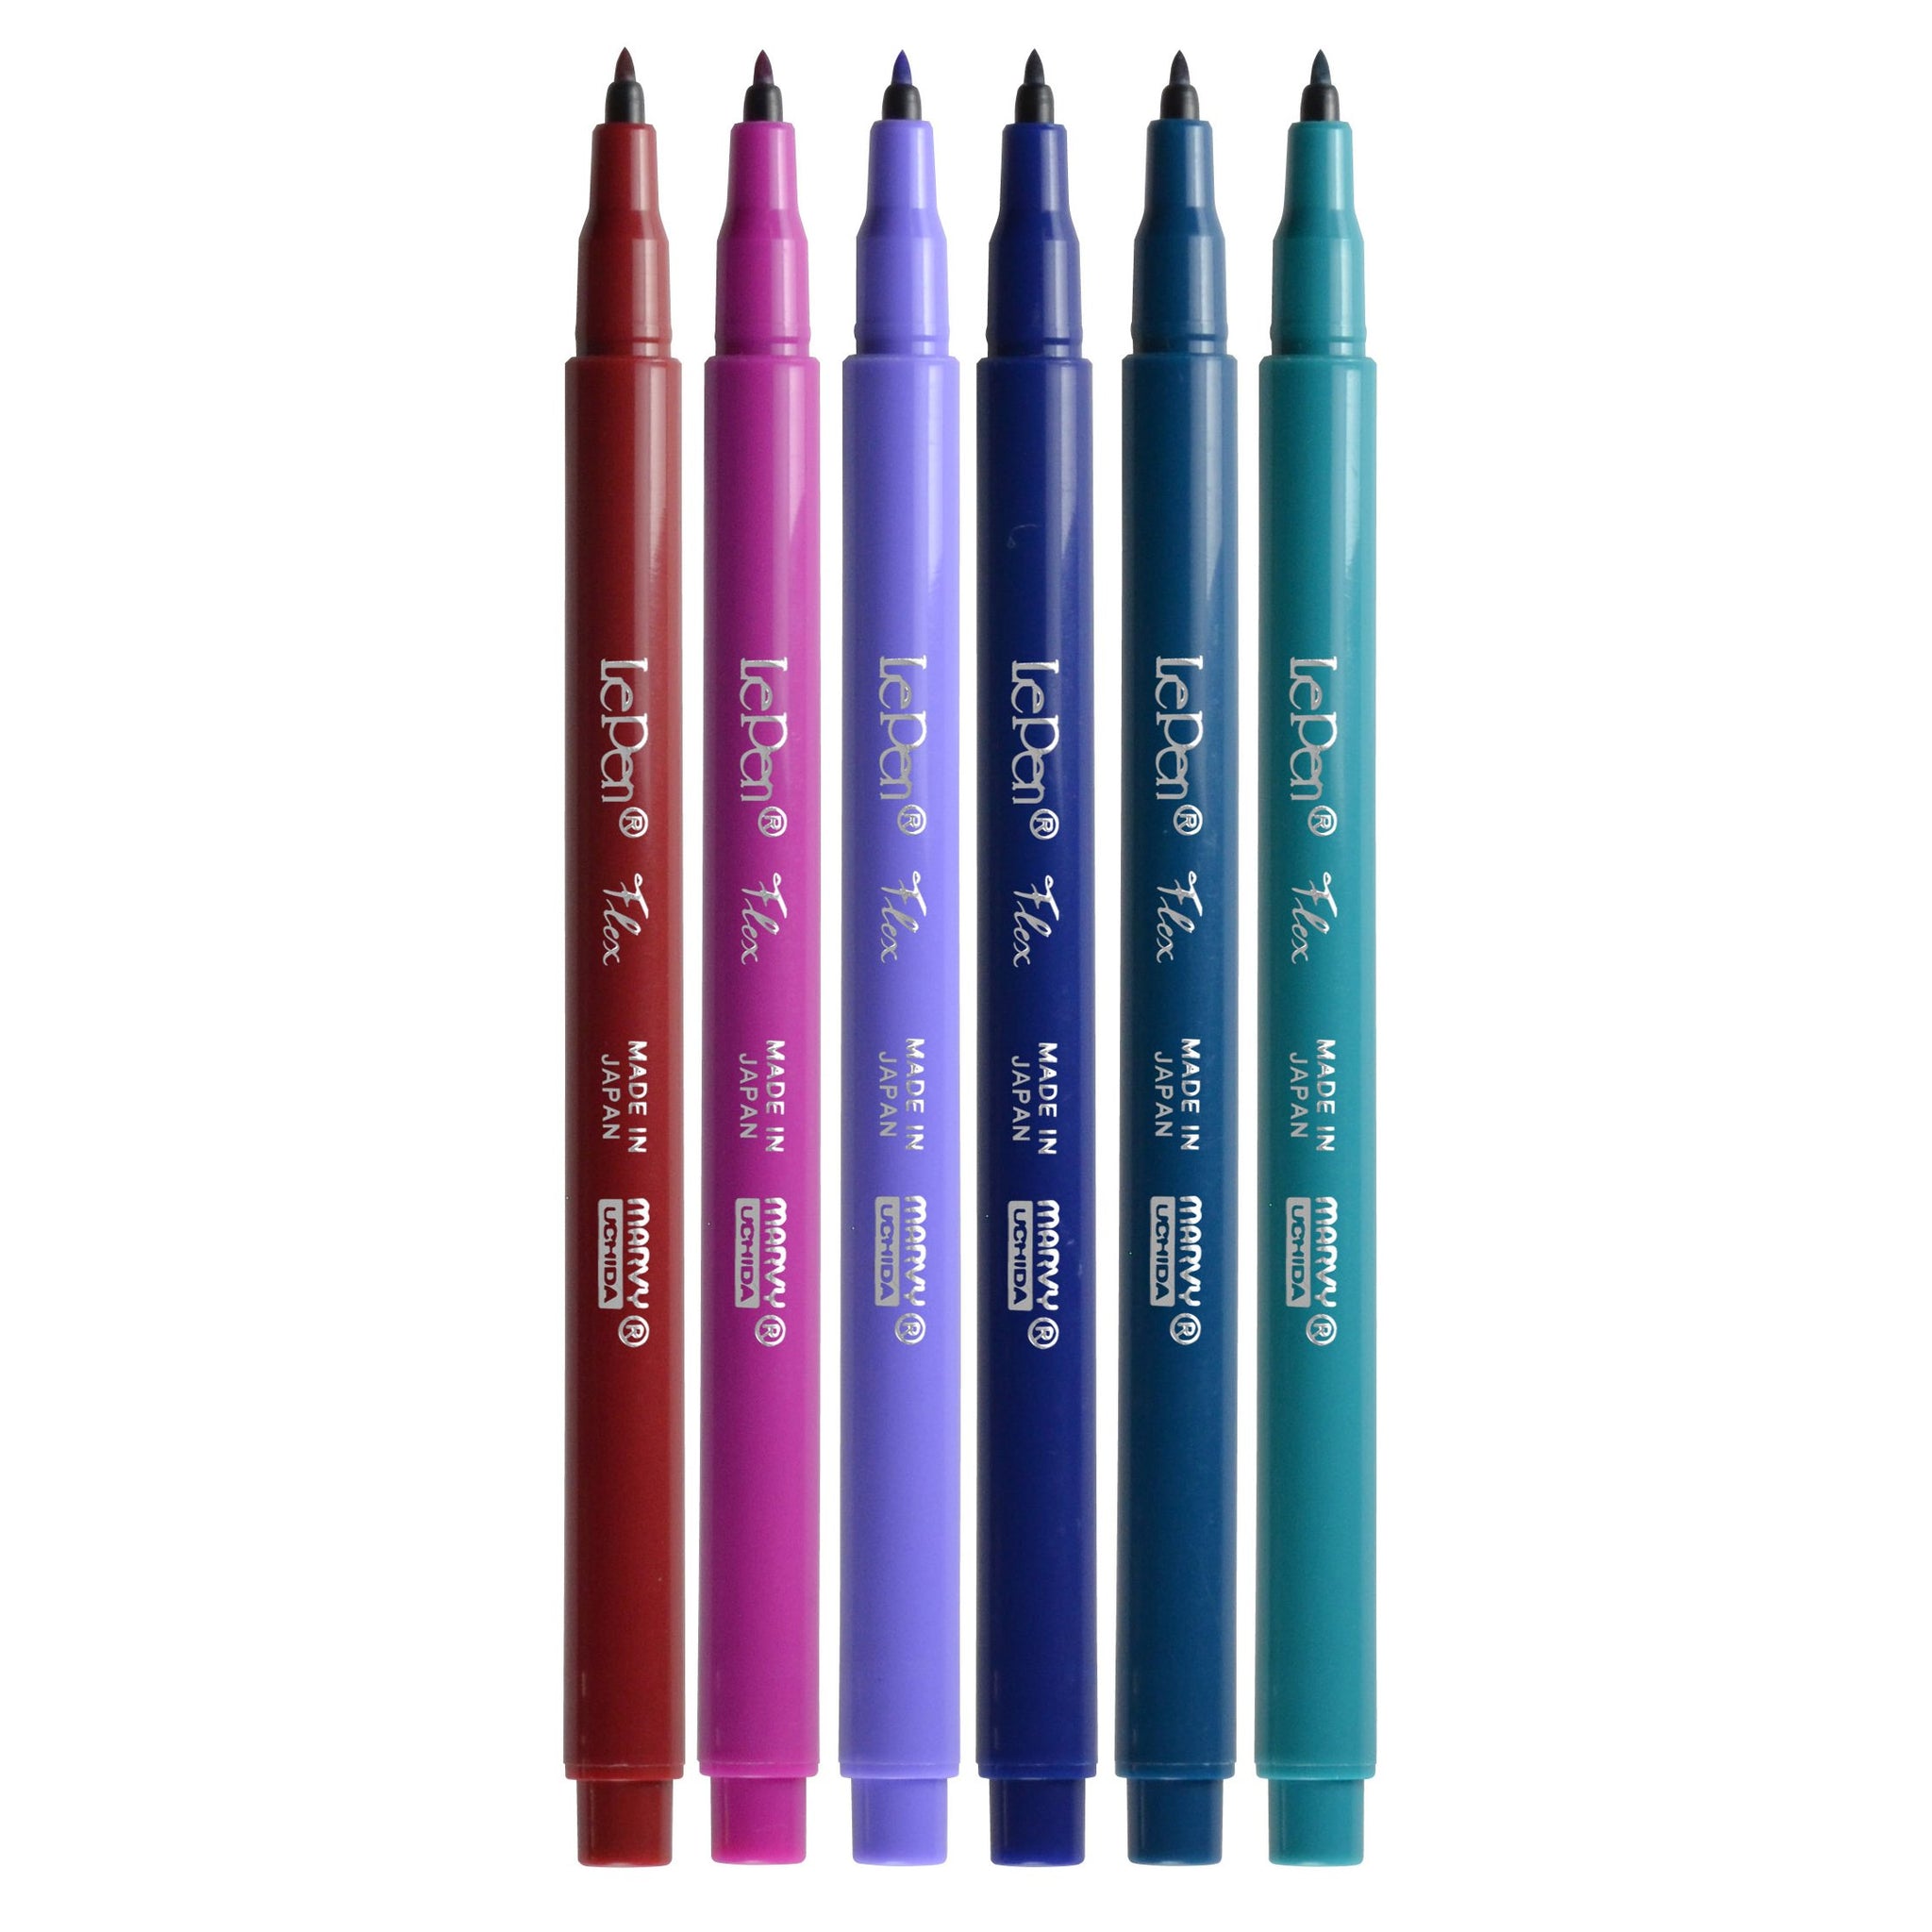 Le Pen Flex - Jewel 6-pack – Ink+Volt